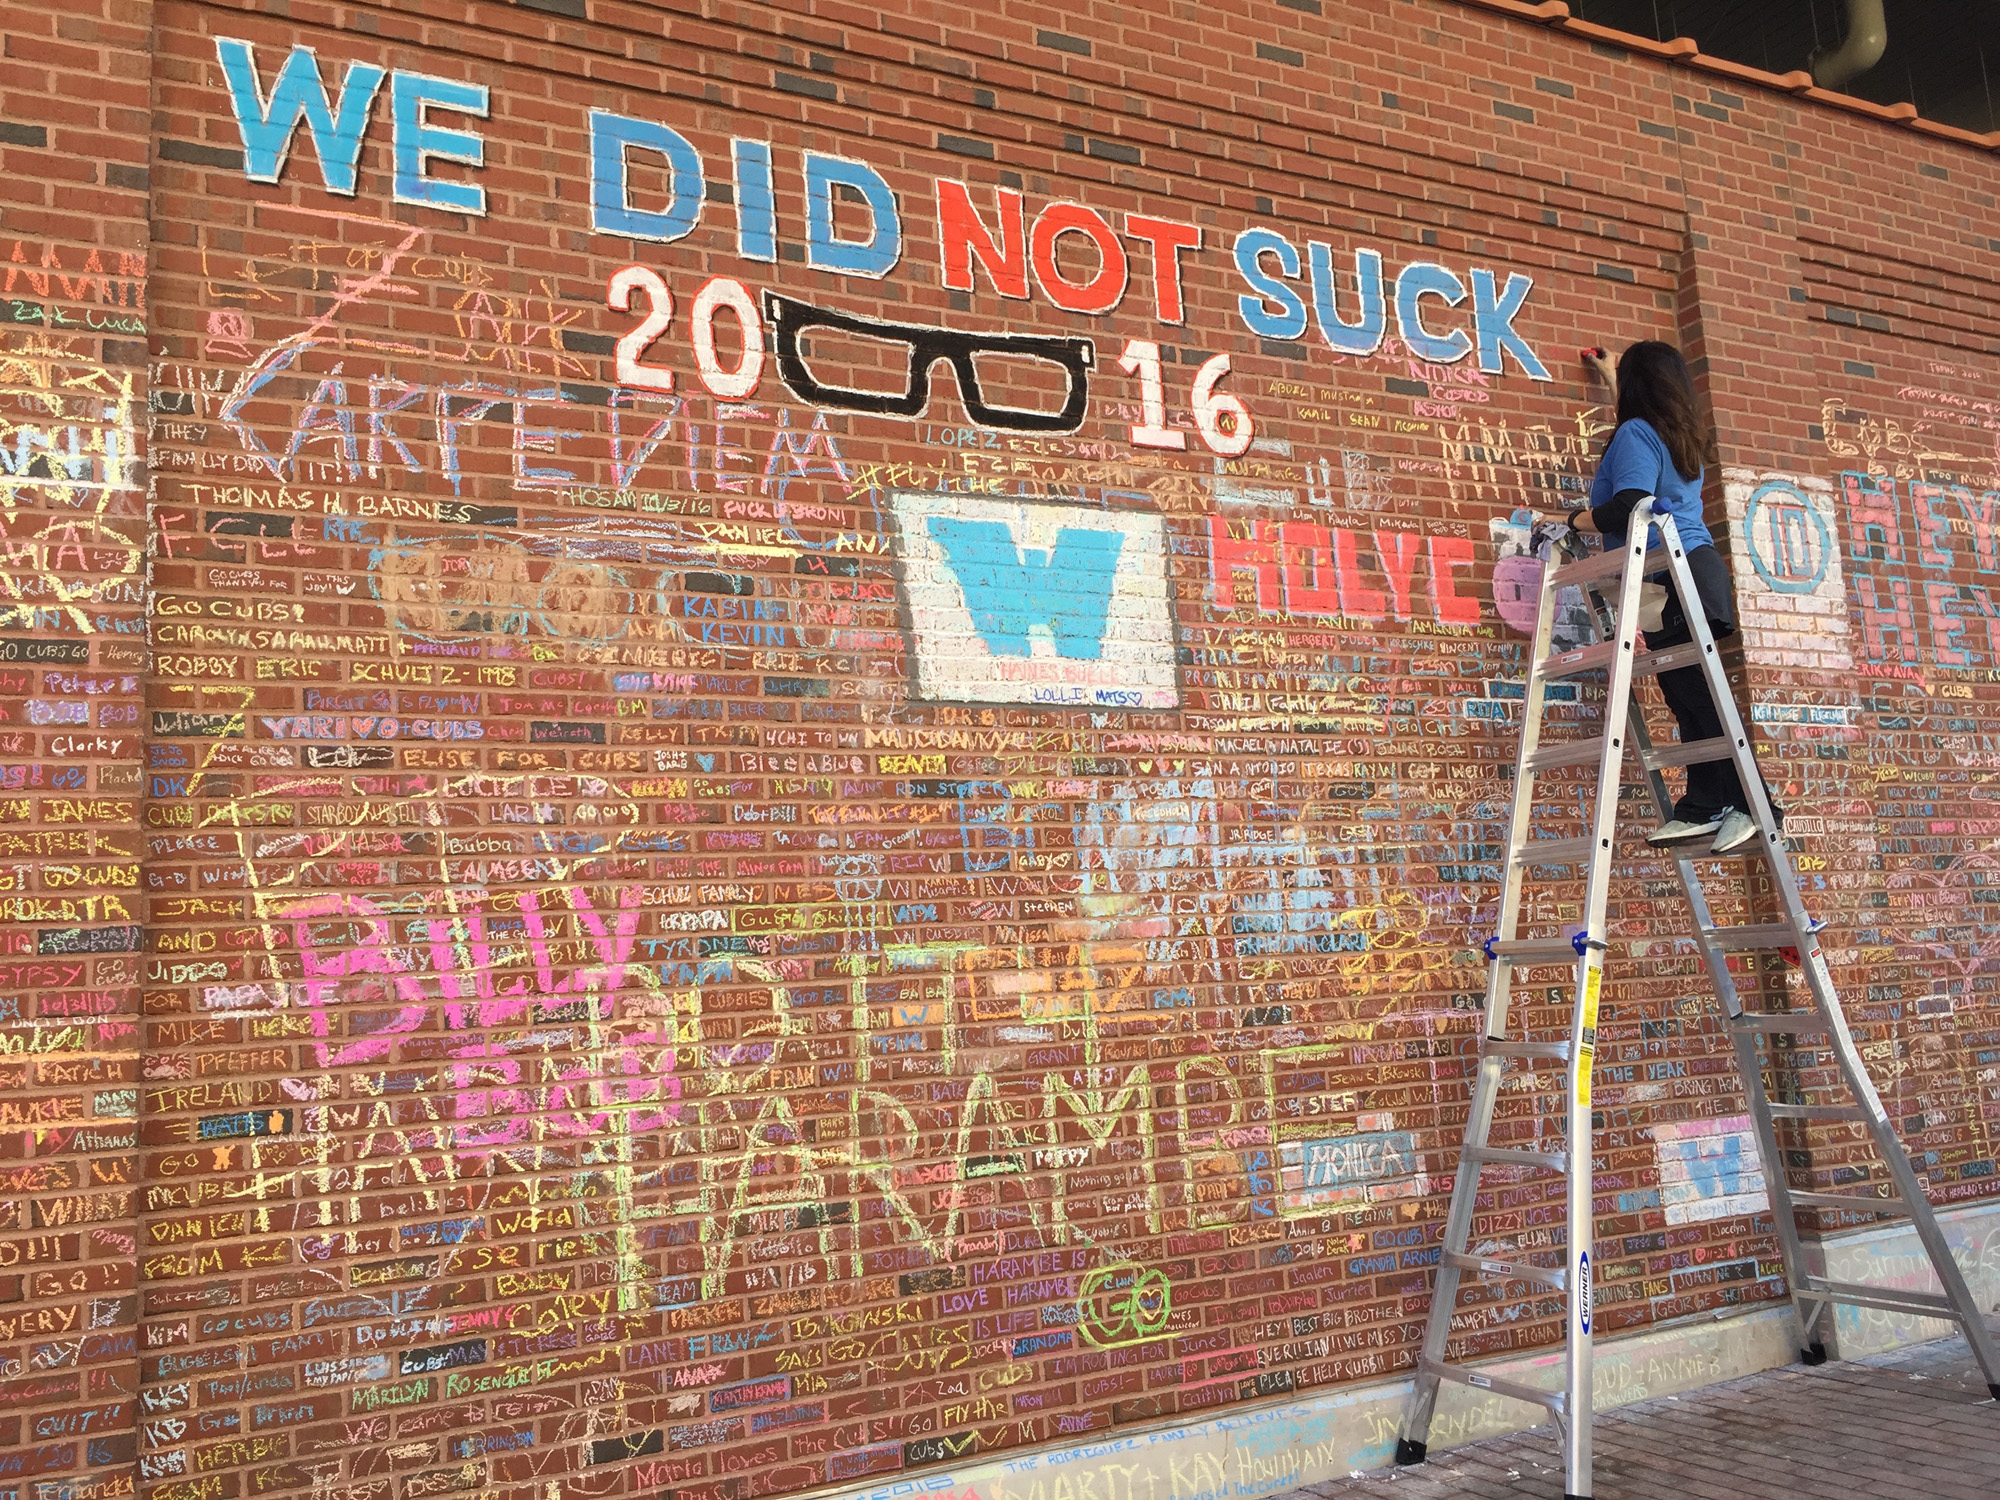 Nancy on ladder creating chalk art on the brick wall of Wrigley Field